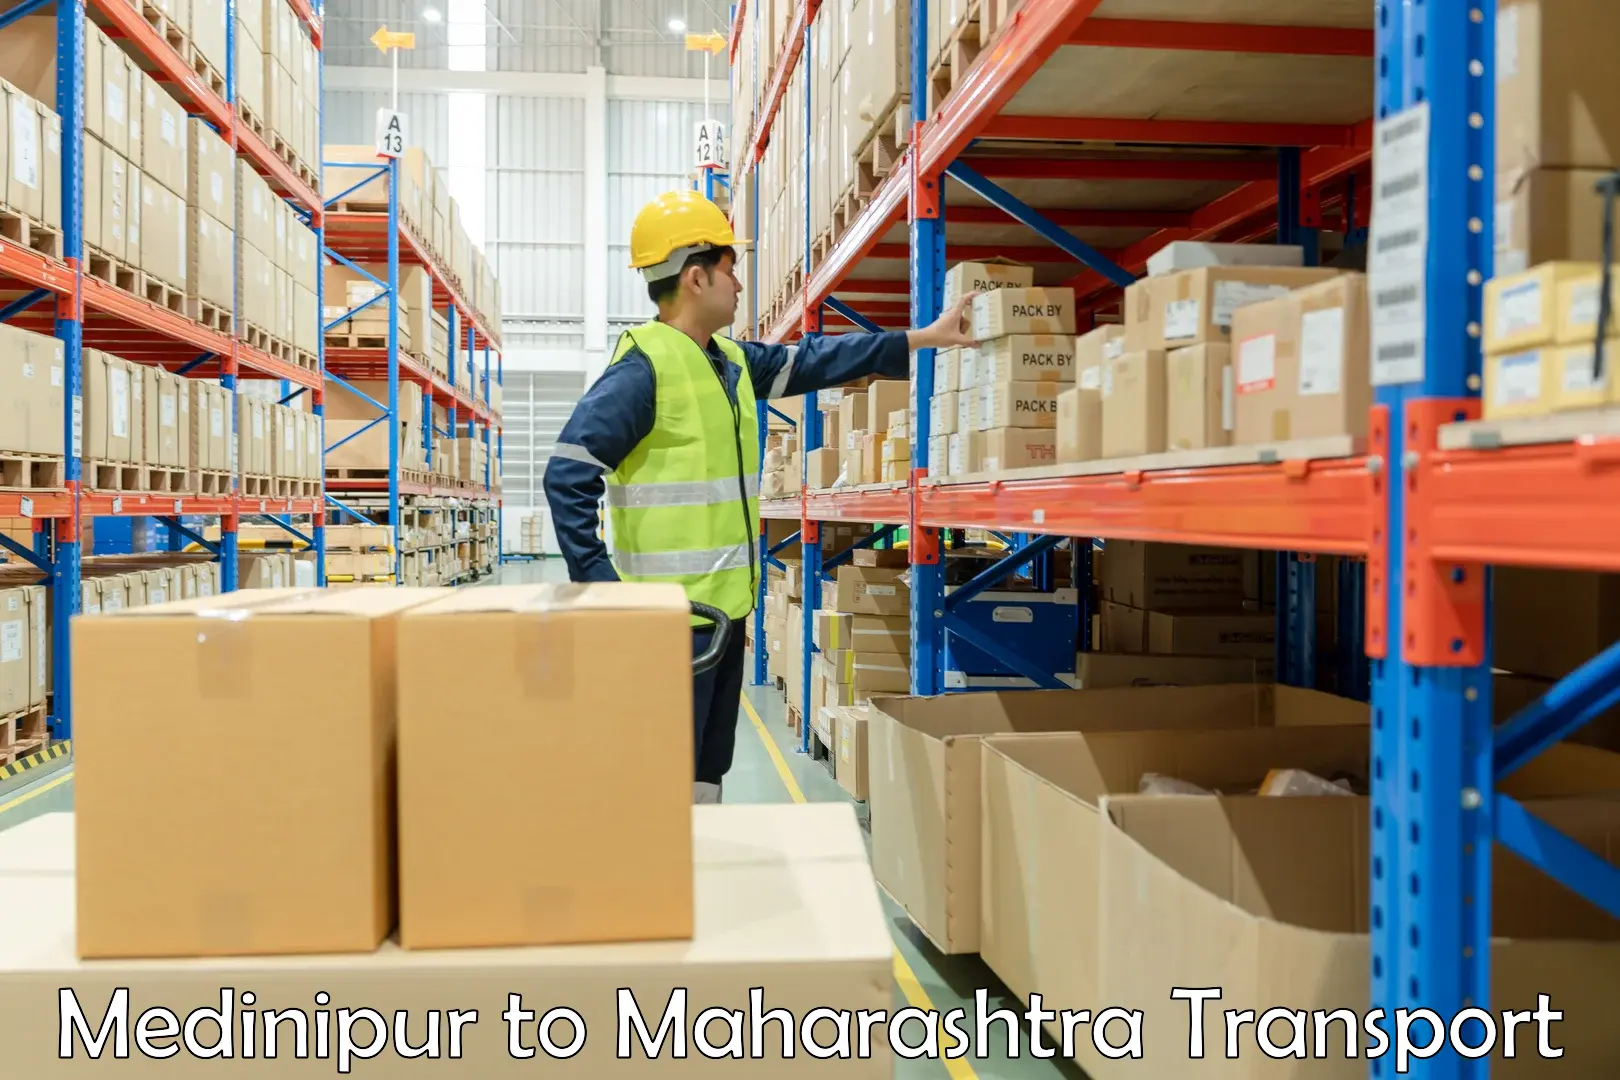 Furniture transport service in Medinipur to Mudal